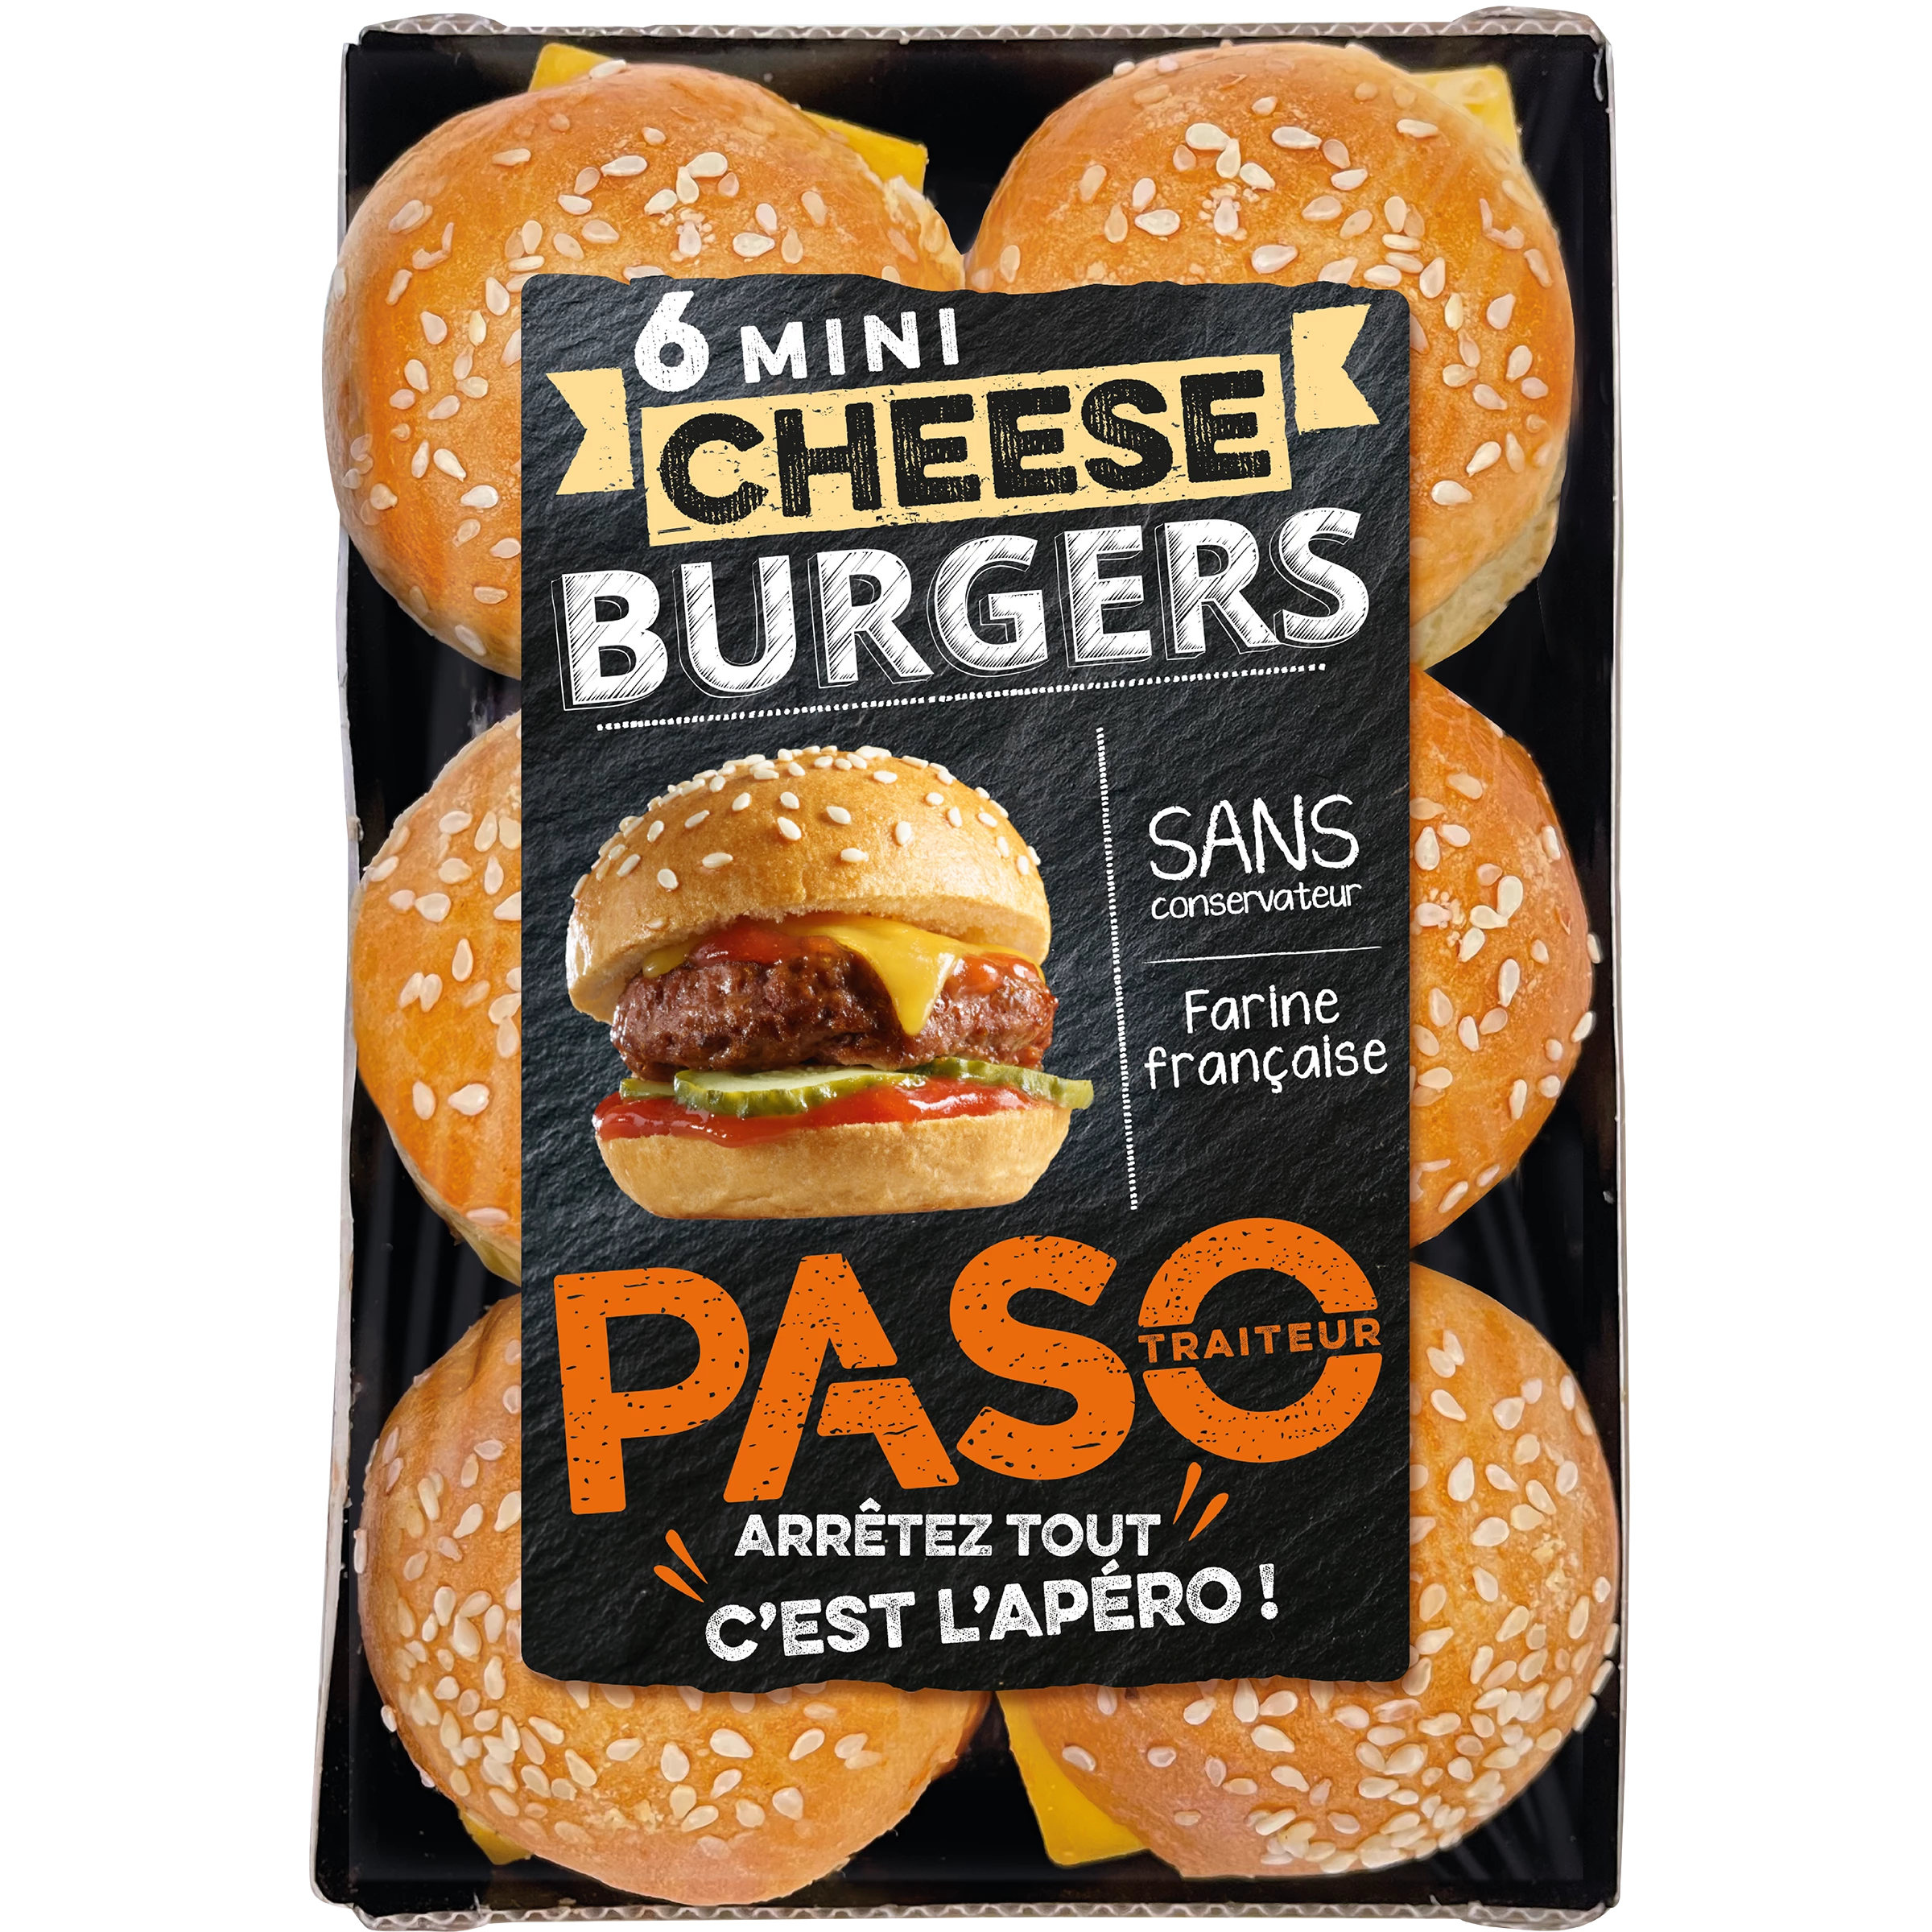 Mini cheese burgers - PASO